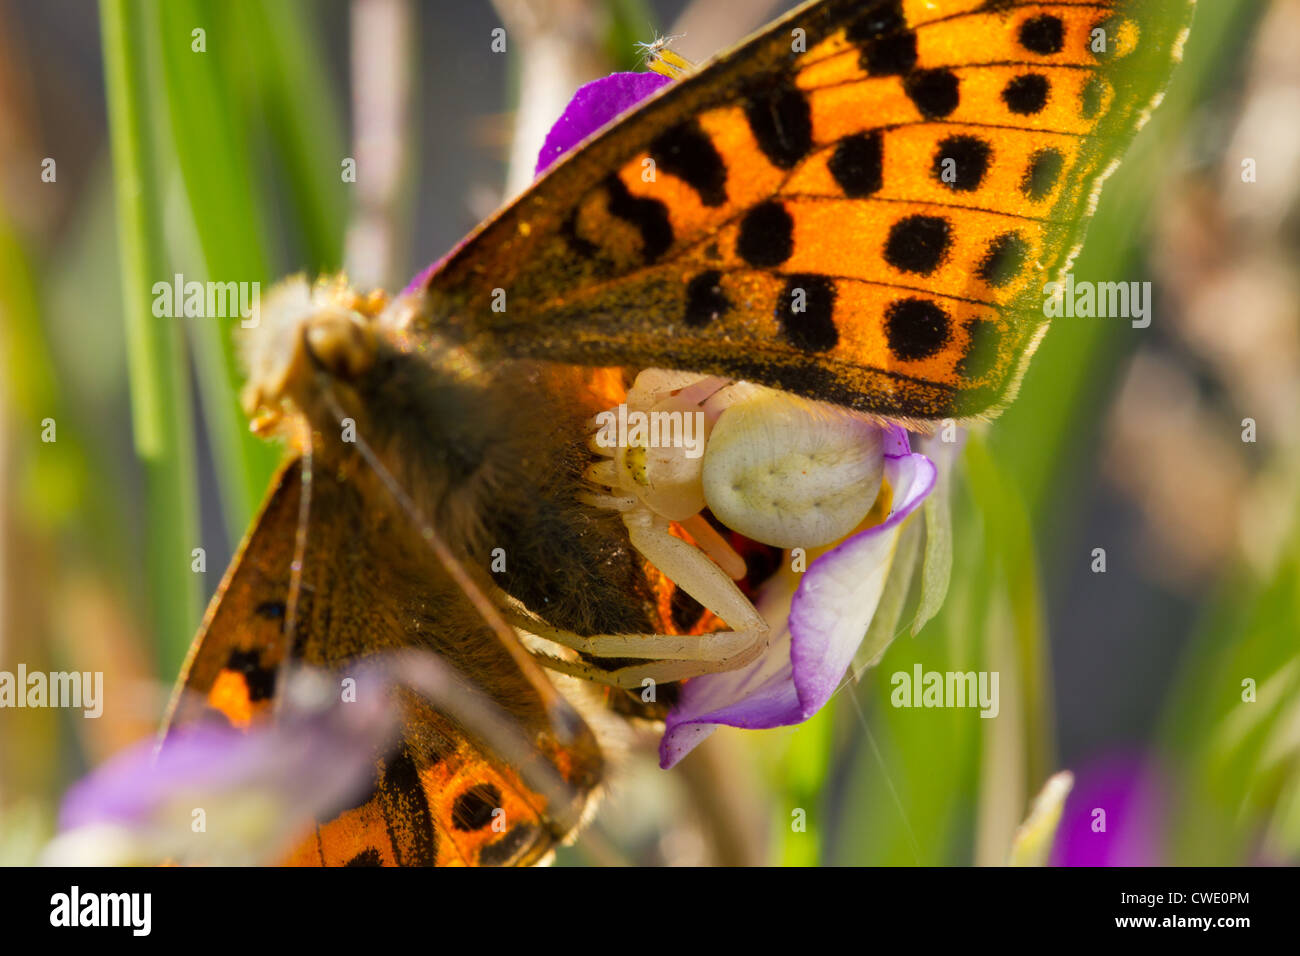 Goldrute Krabbenspinne - Misumena Vatia, hält seine Beute, ein Fritillary Schmetterling - Argynnis sp. Stockfoto